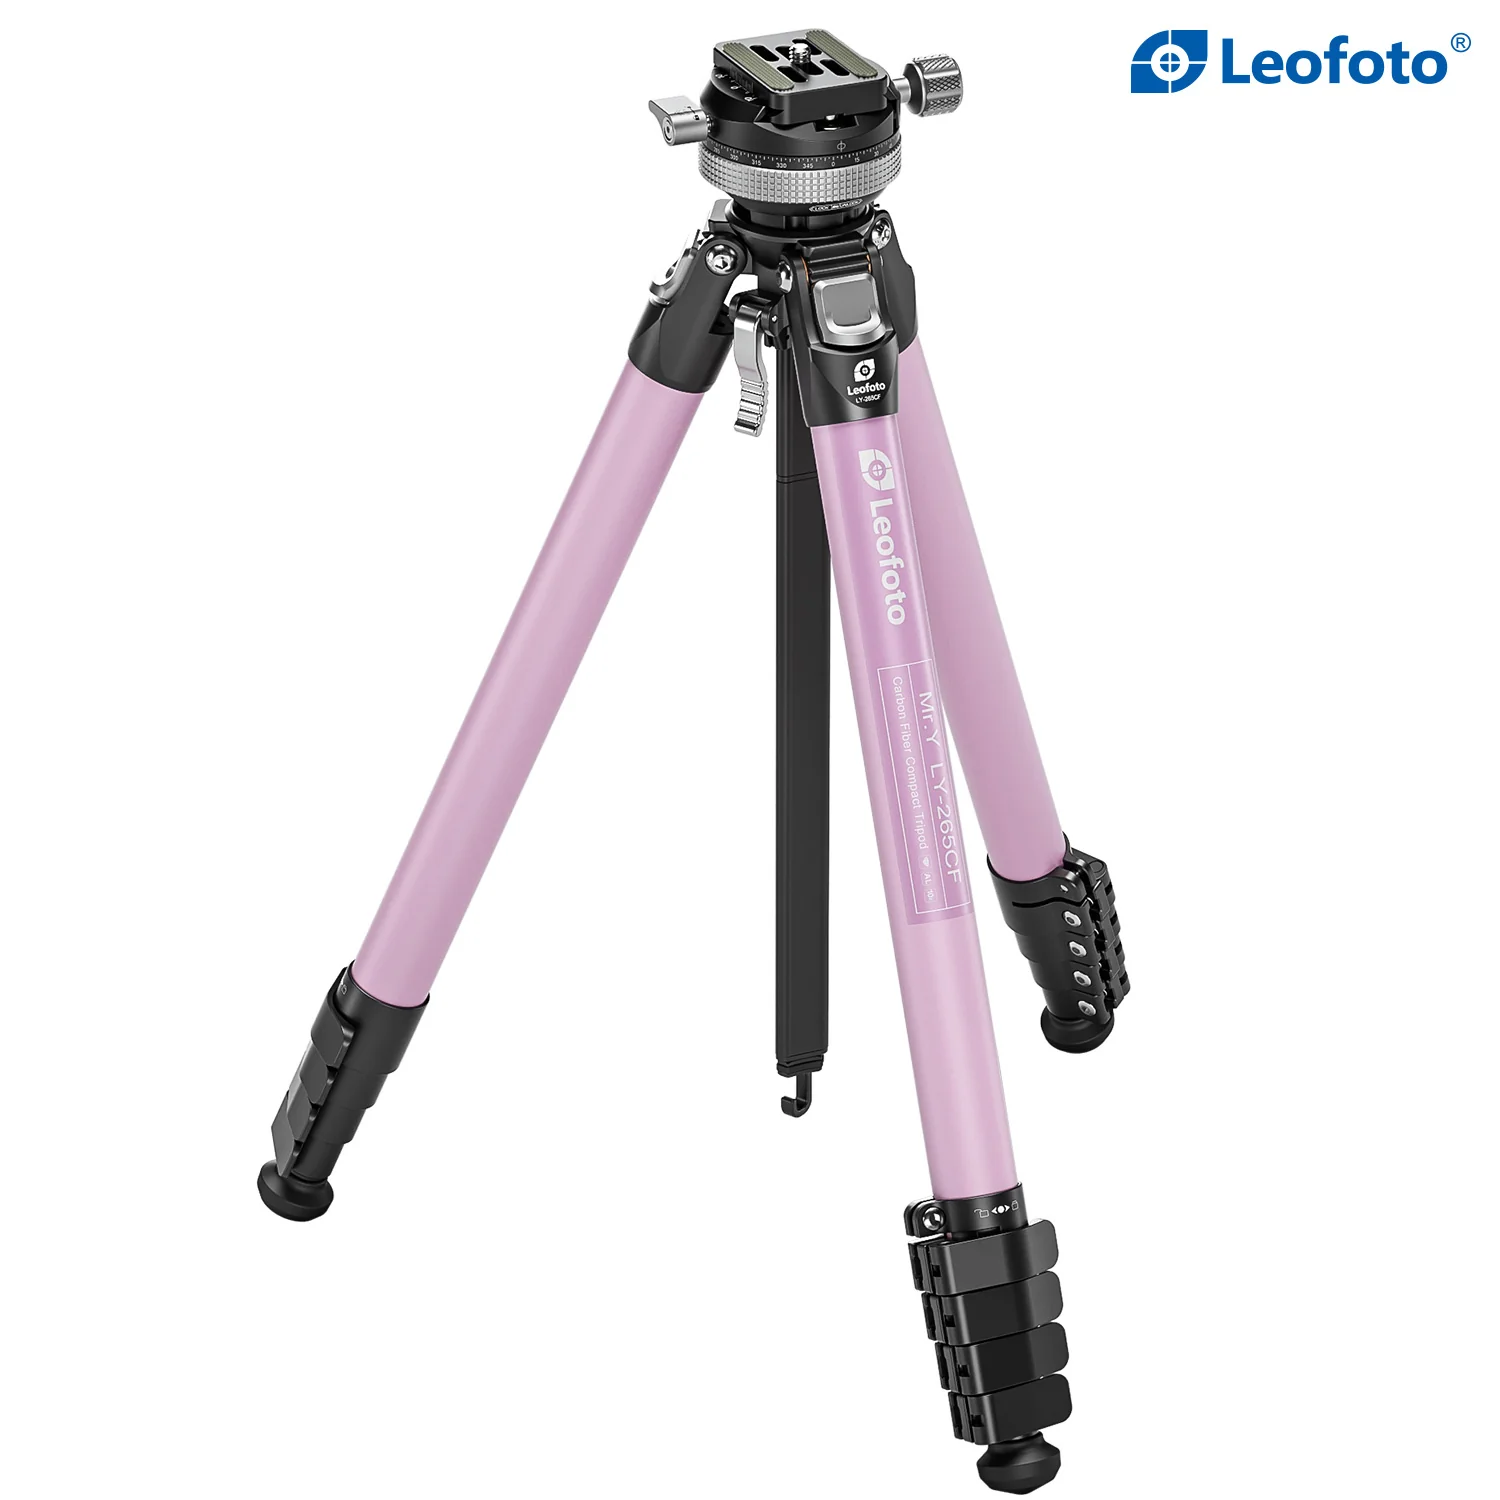 Leofoto LY-265CF Pink Carbon Fiber Camera Tripod with Quick Release